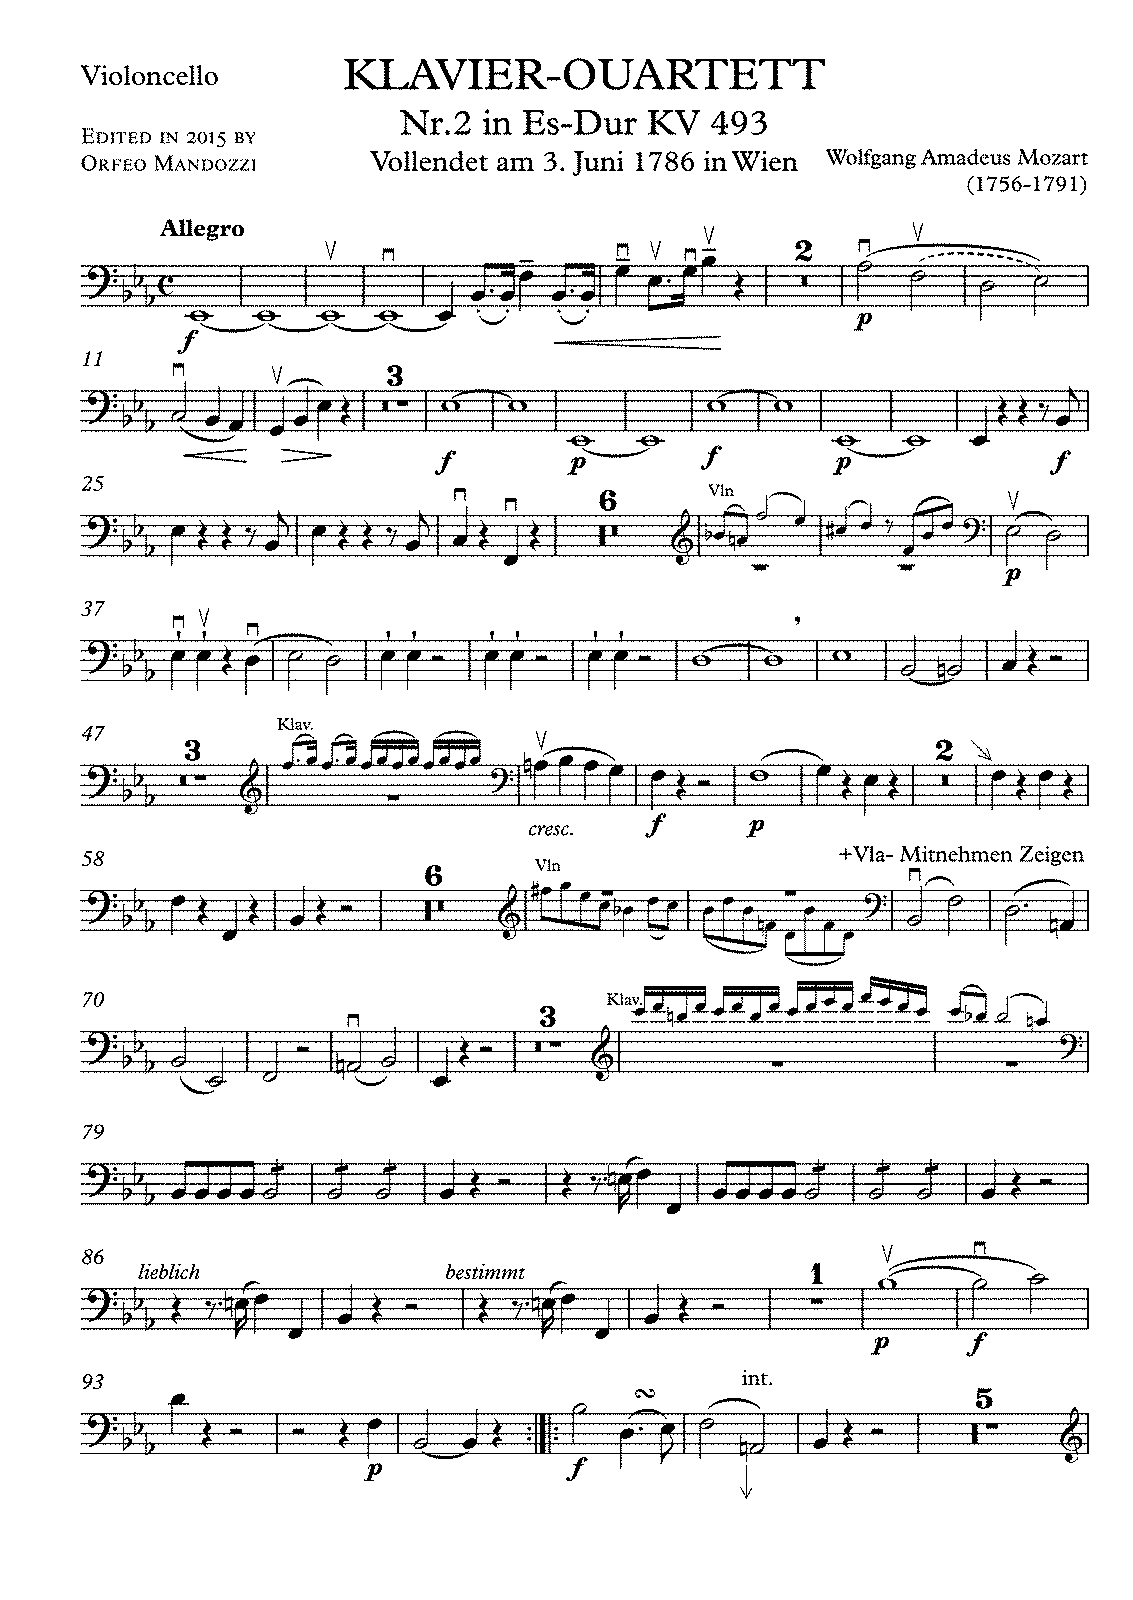 gershwin piano concerto in f imslp